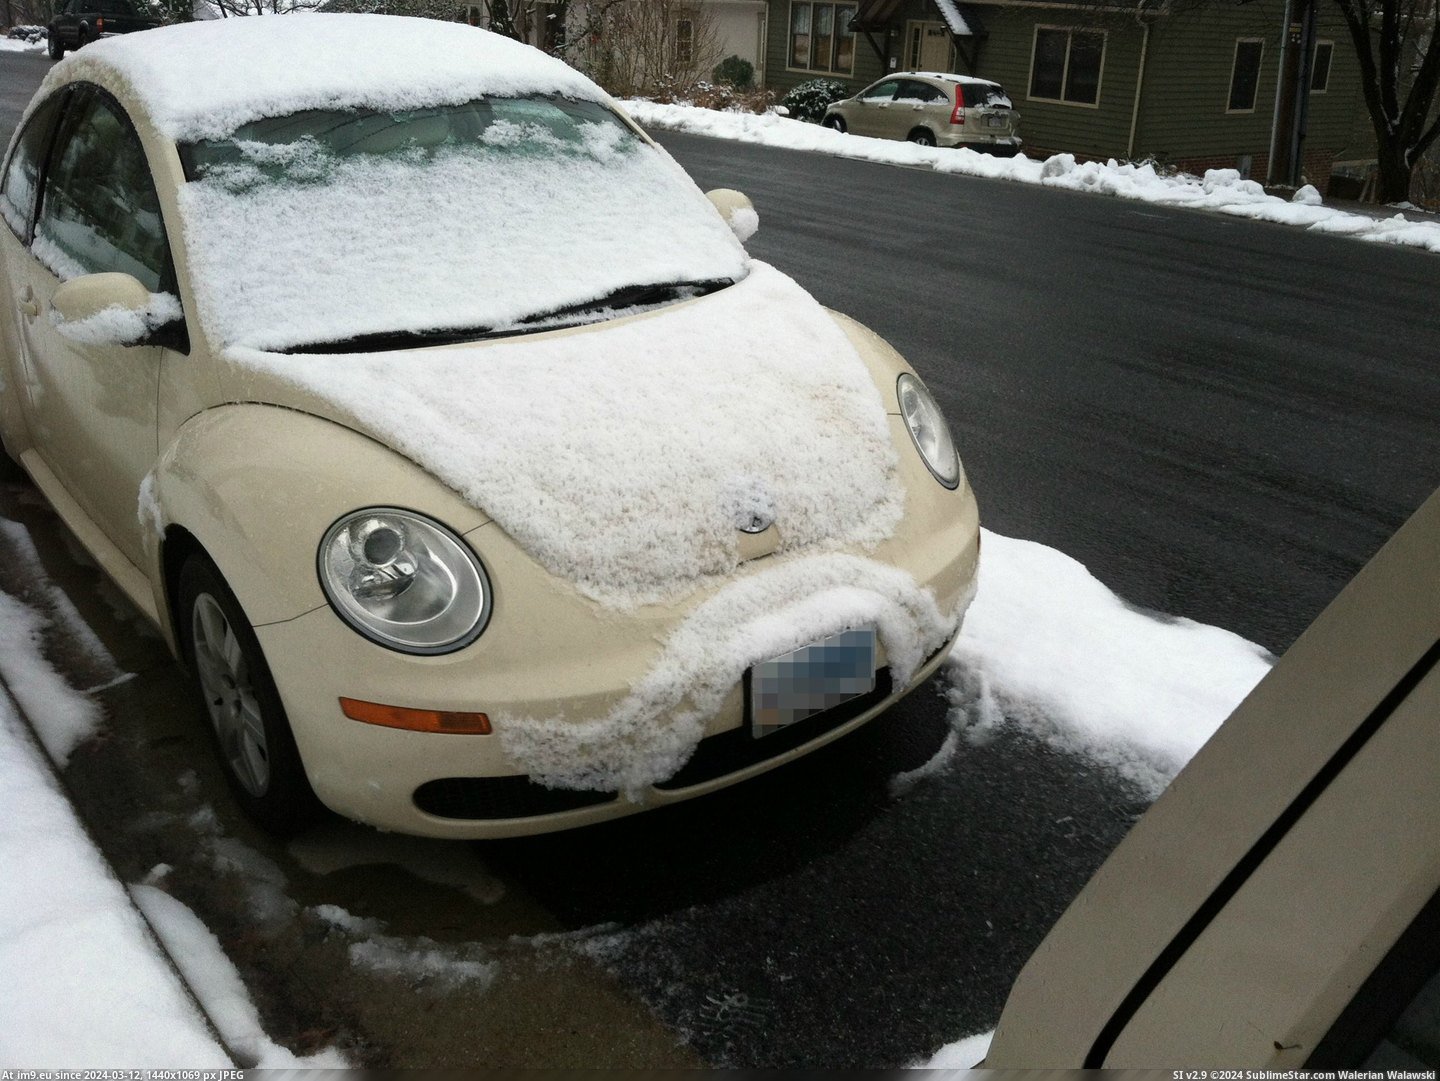 #Car #Mustache #Snow [Mildlyinteresting] This car has a mustache made of snow Pic. (Bild von album My r/MILDLYINTERESTING favs))